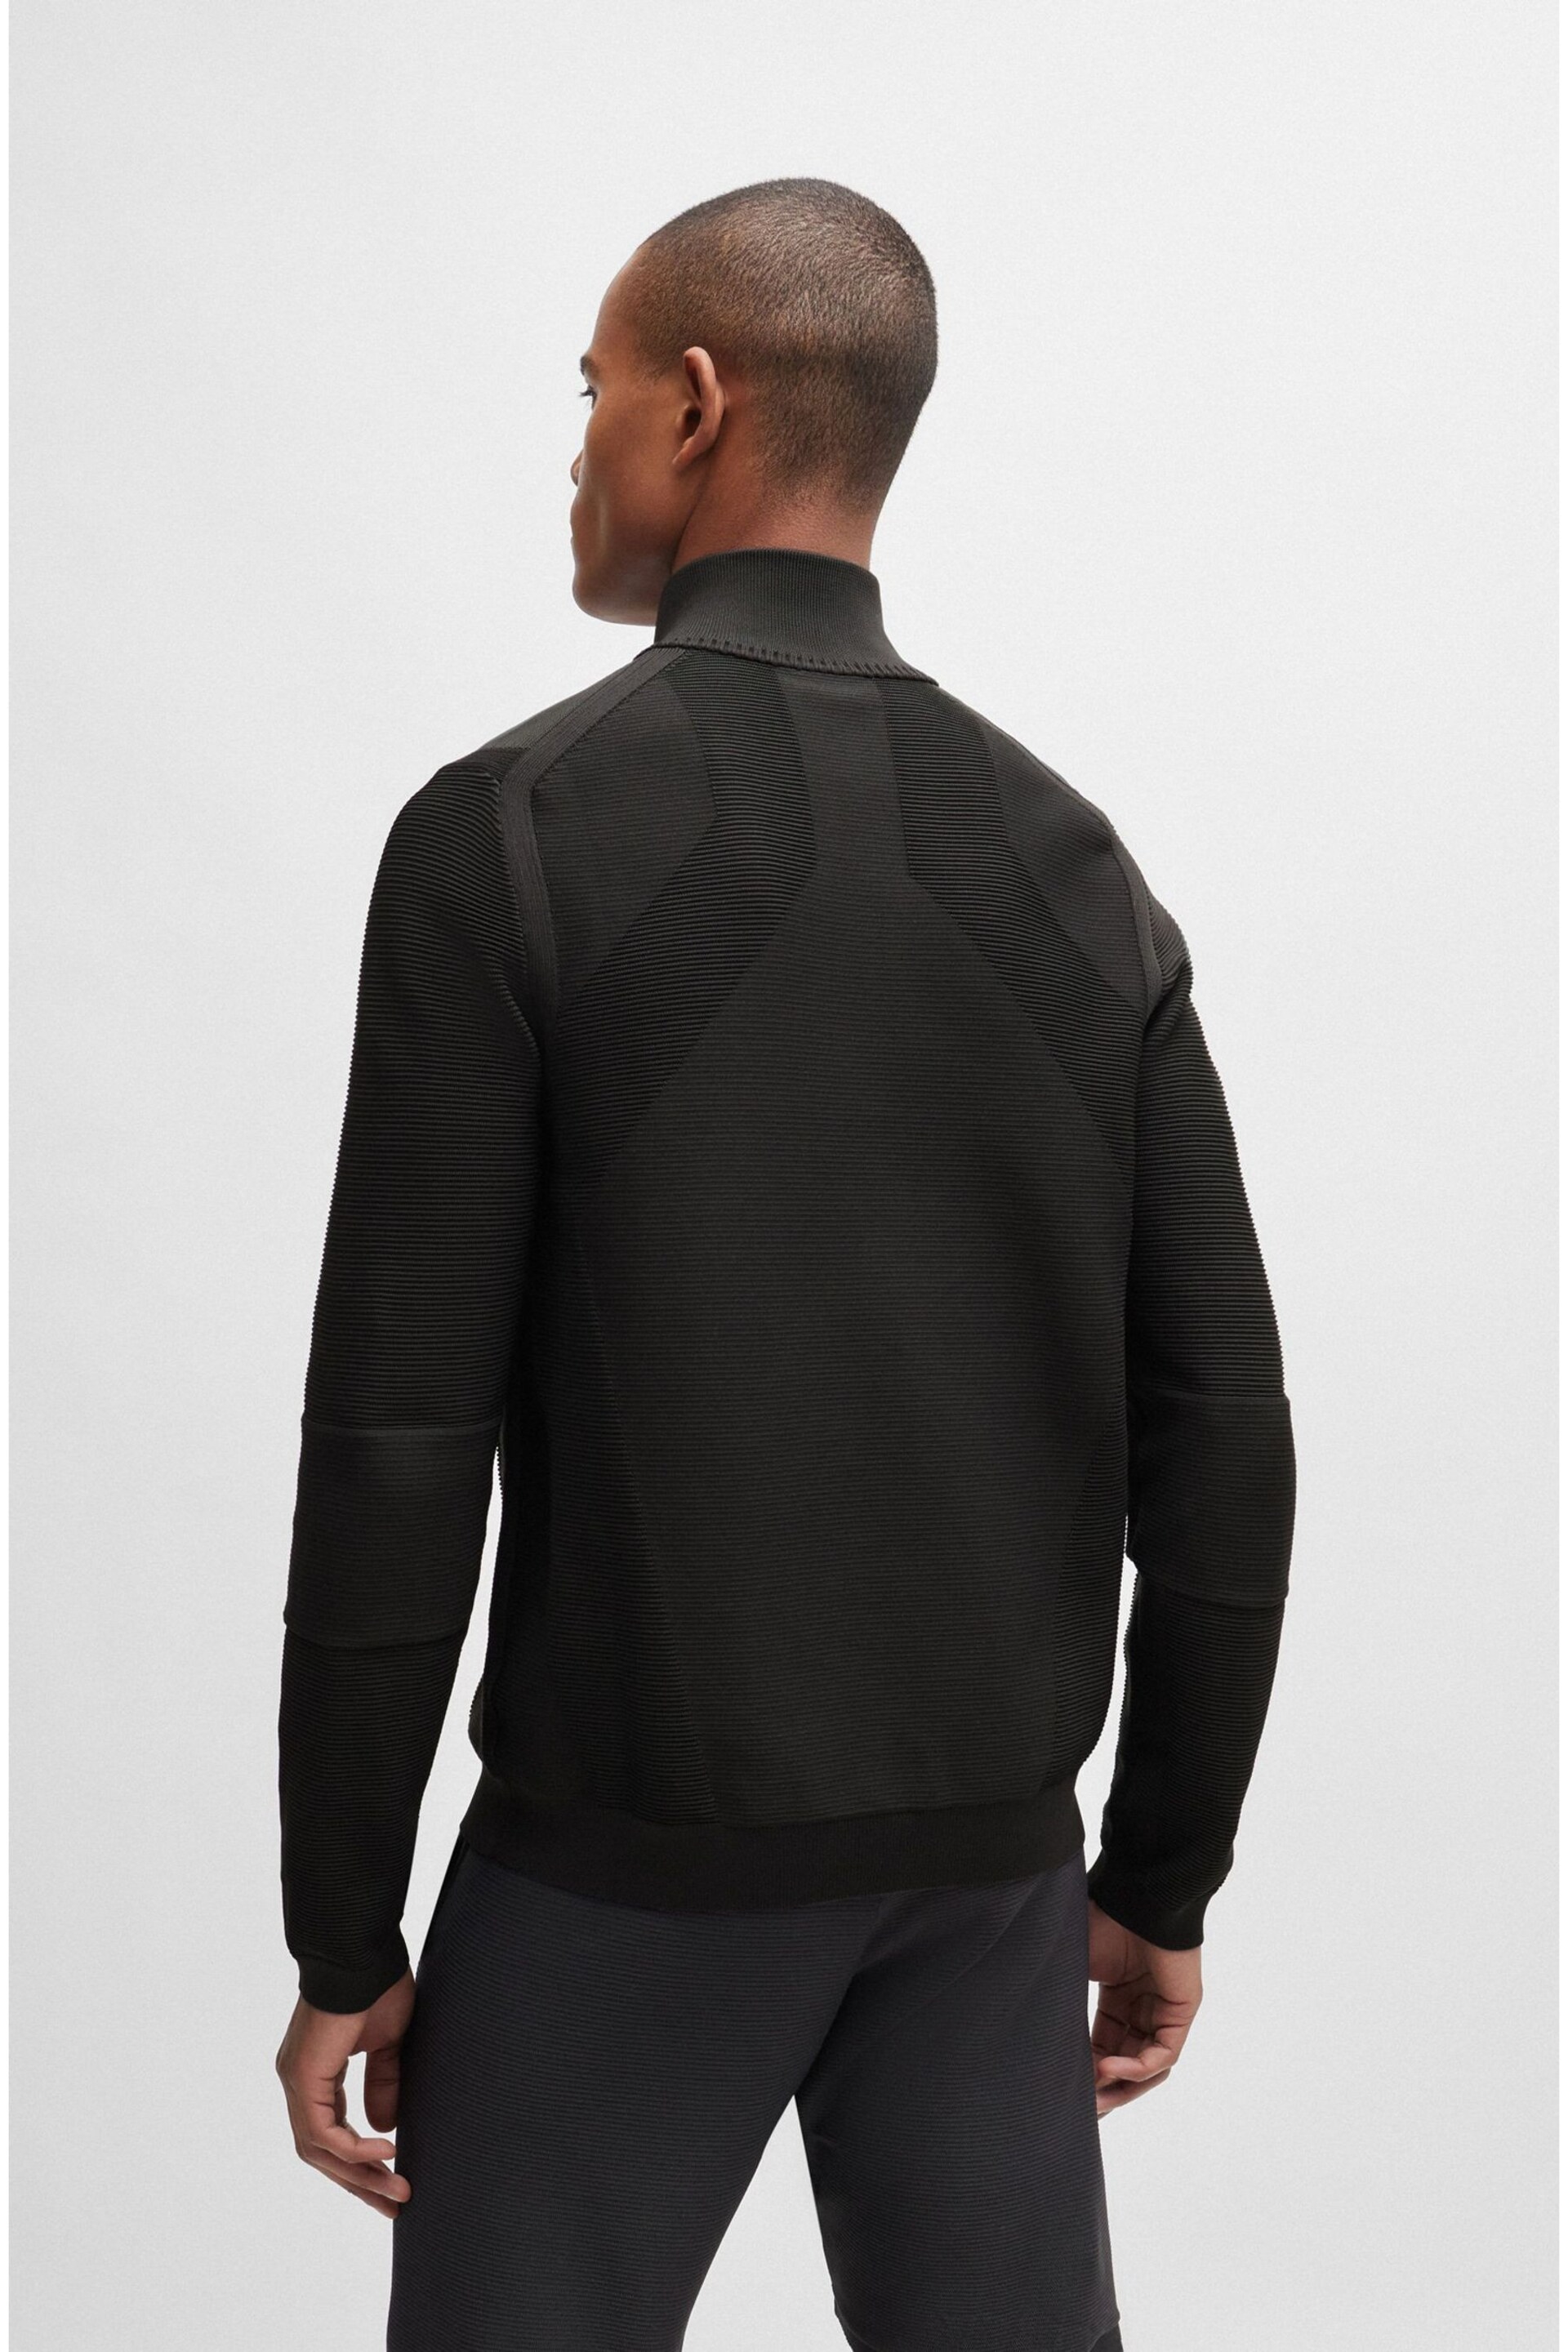 BOSS Black Zip Neck Stretch Sweatshirt - Image 4 of 5